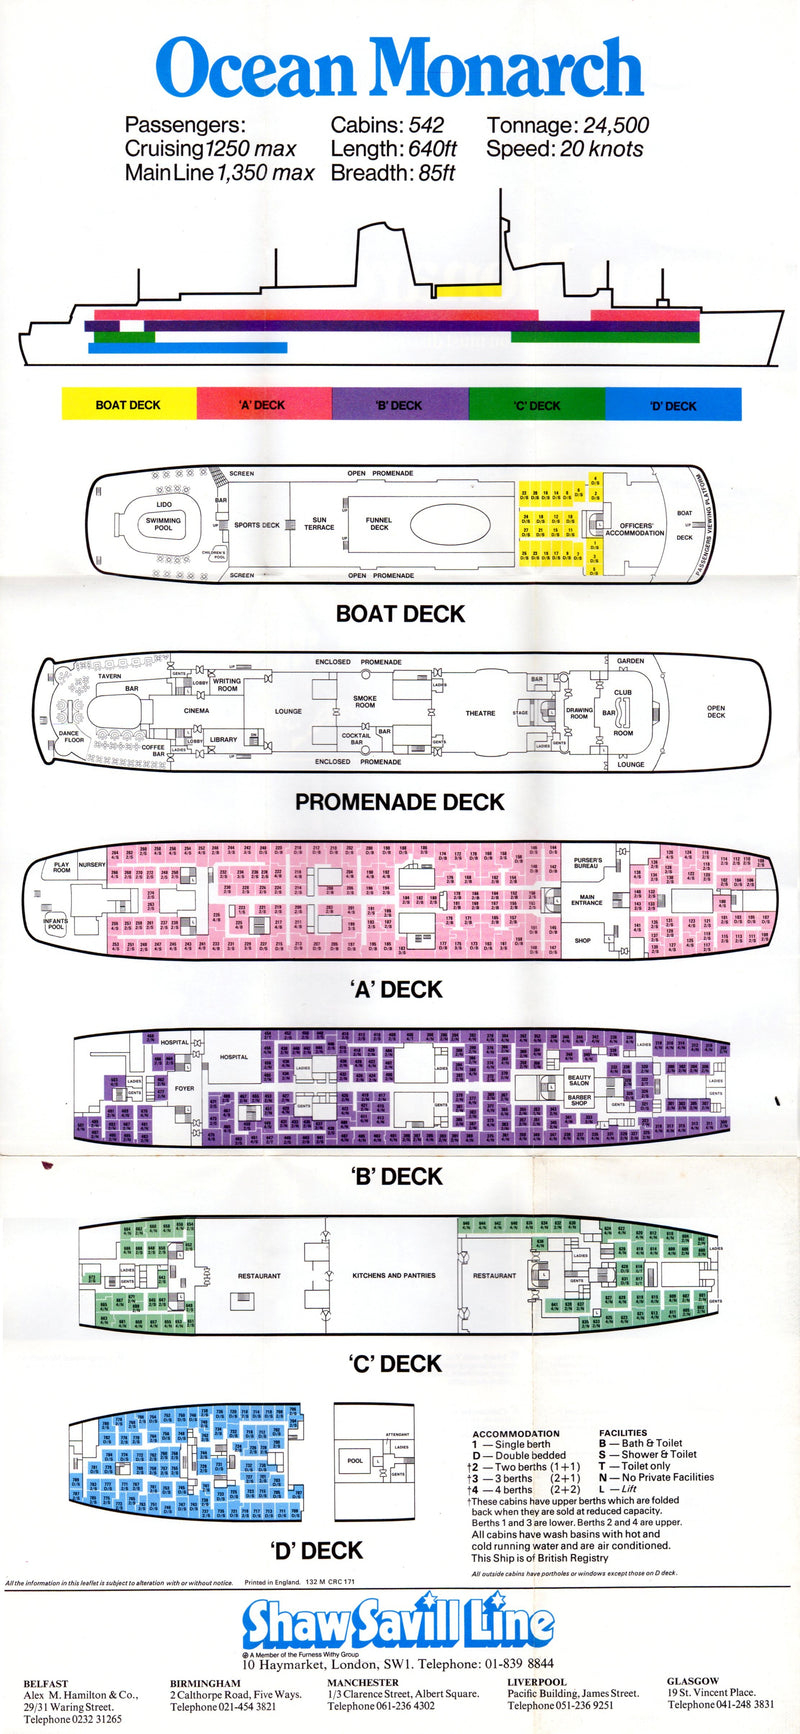 OCEAN MONARCH: 1957 - Deck plan & interiors from 1971